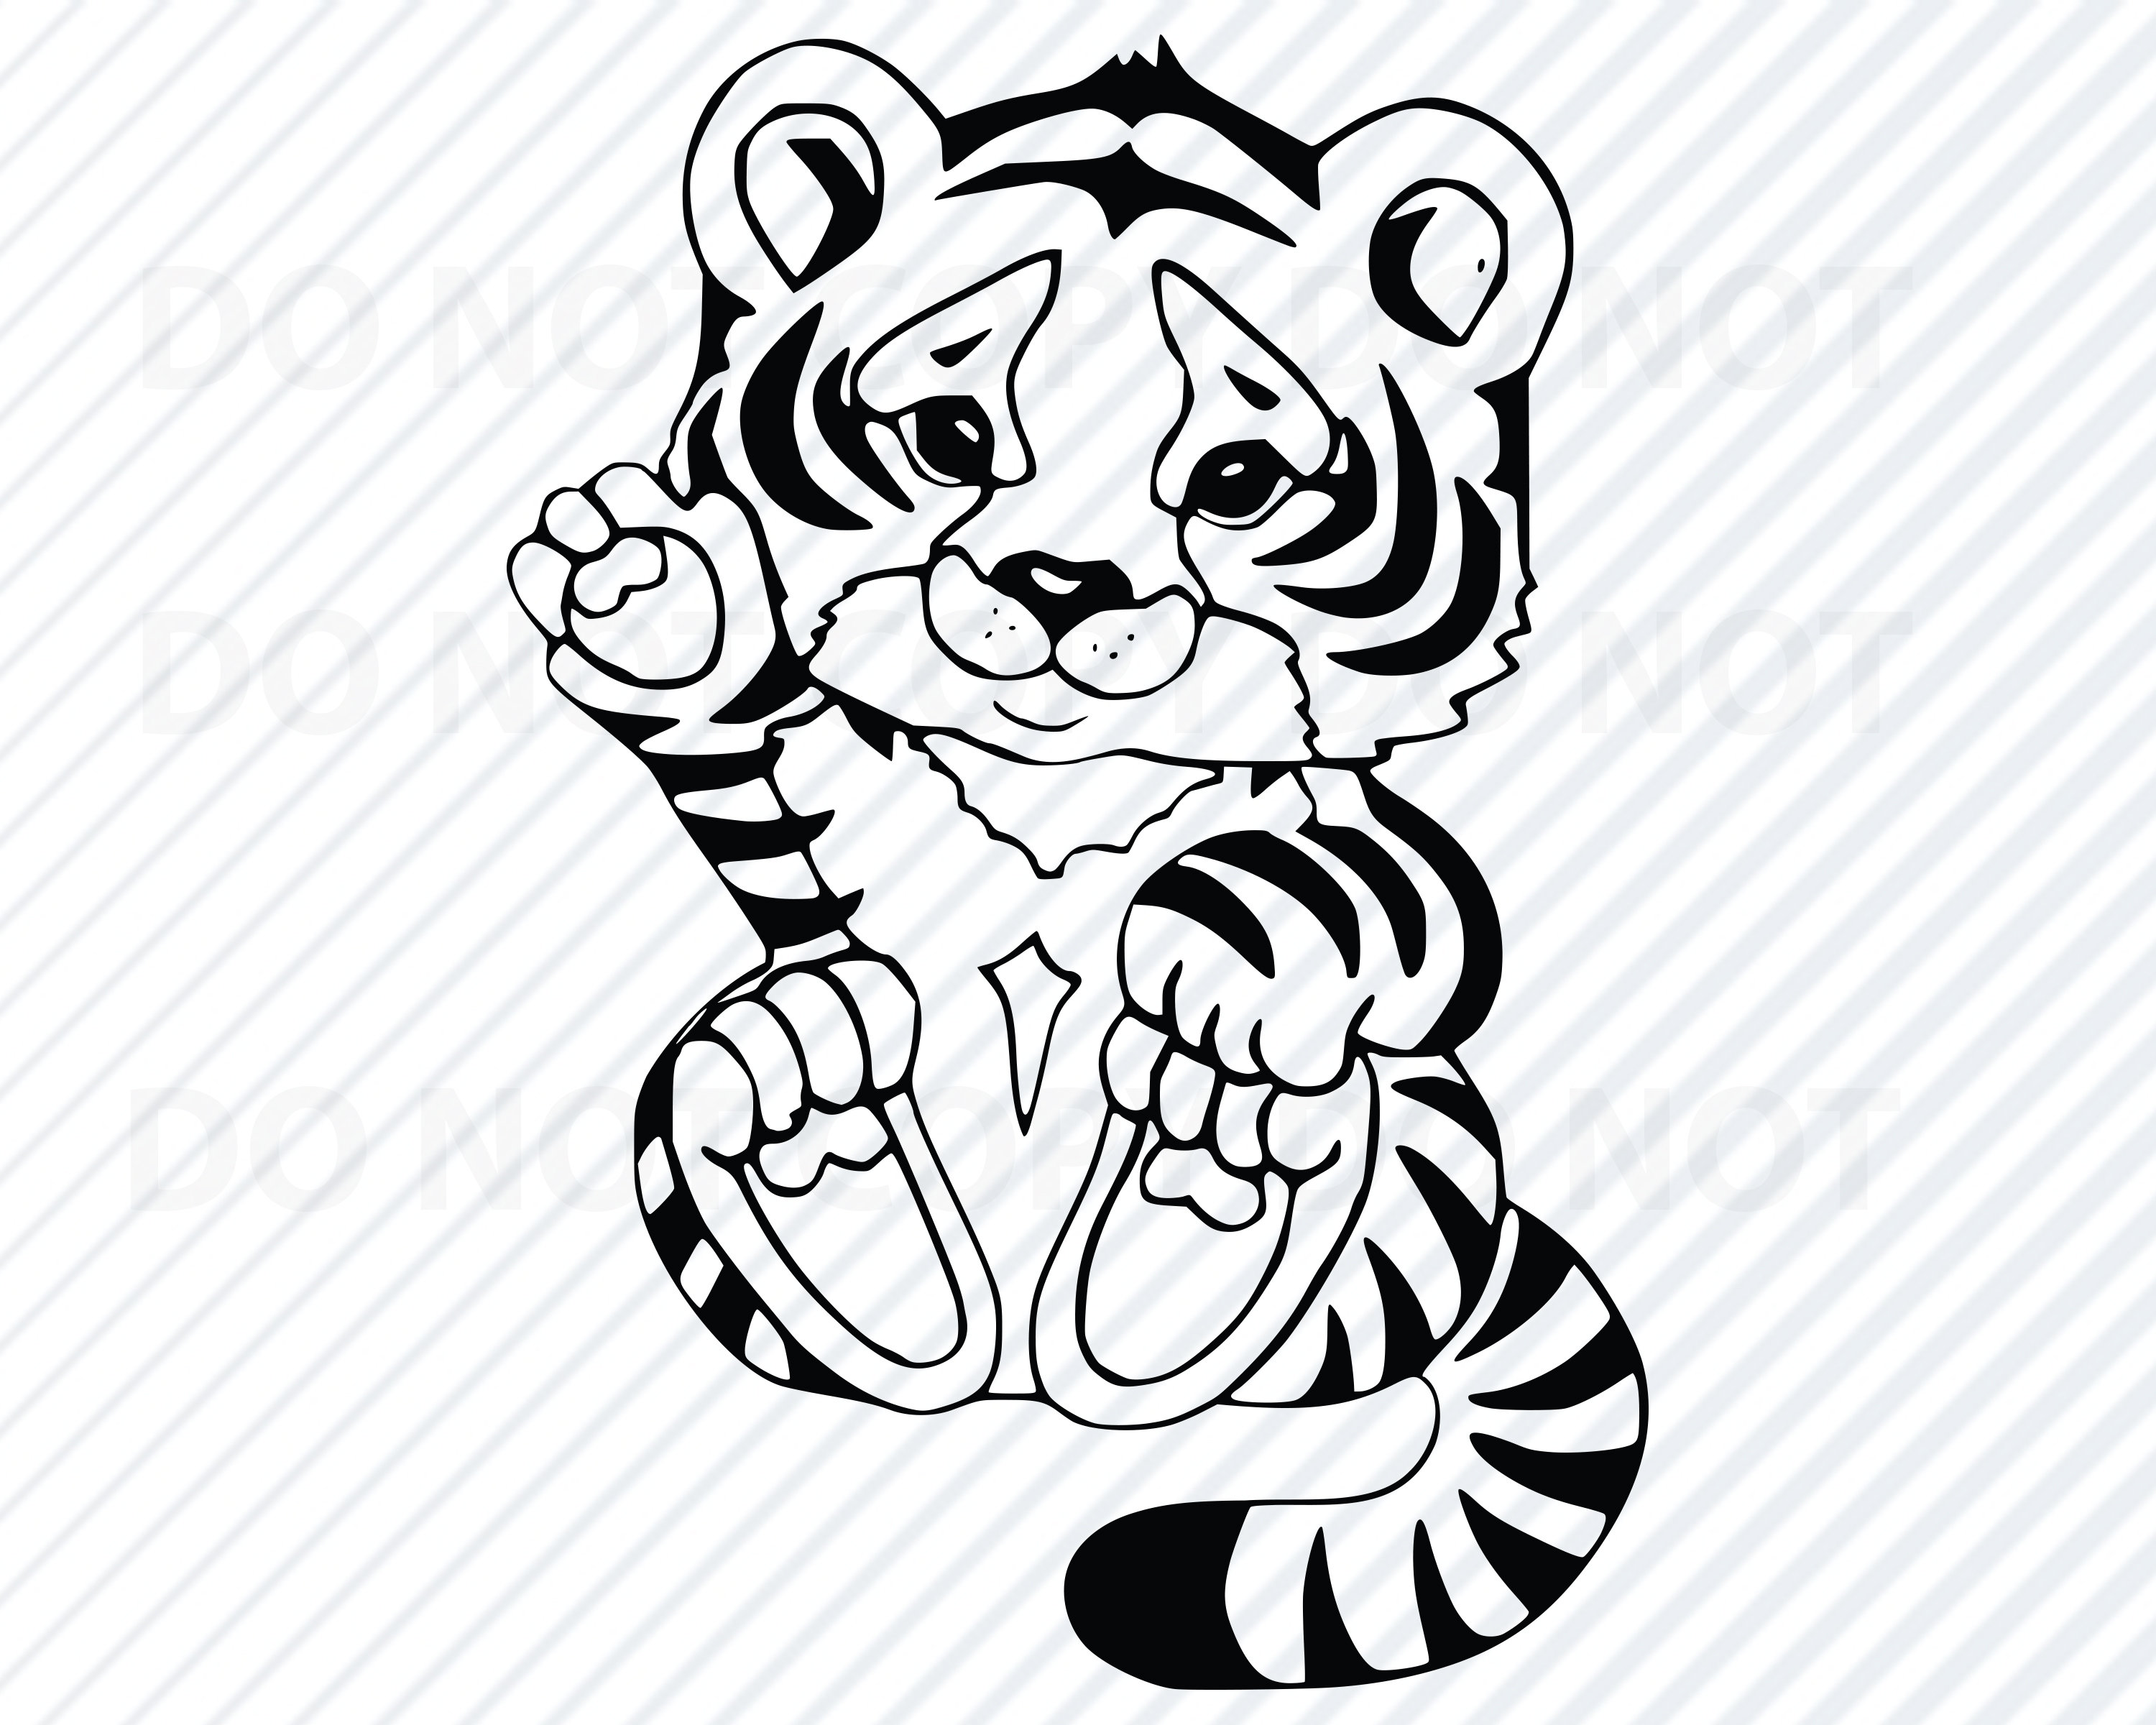 Download Baby Tiger 3 SVG Black & white Transfer Vector Images | Etsy